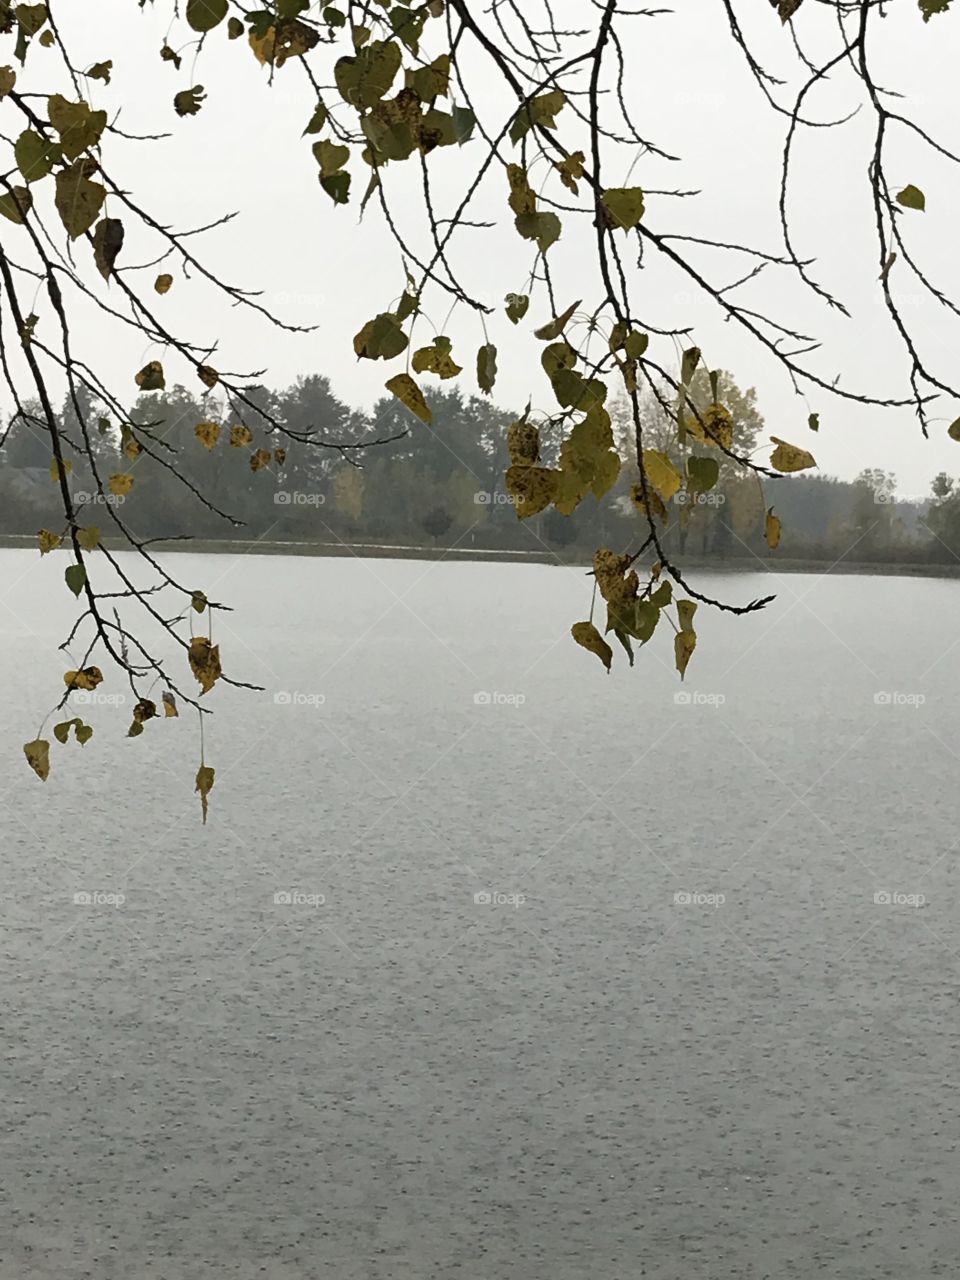 Rainy fall day in Michigan